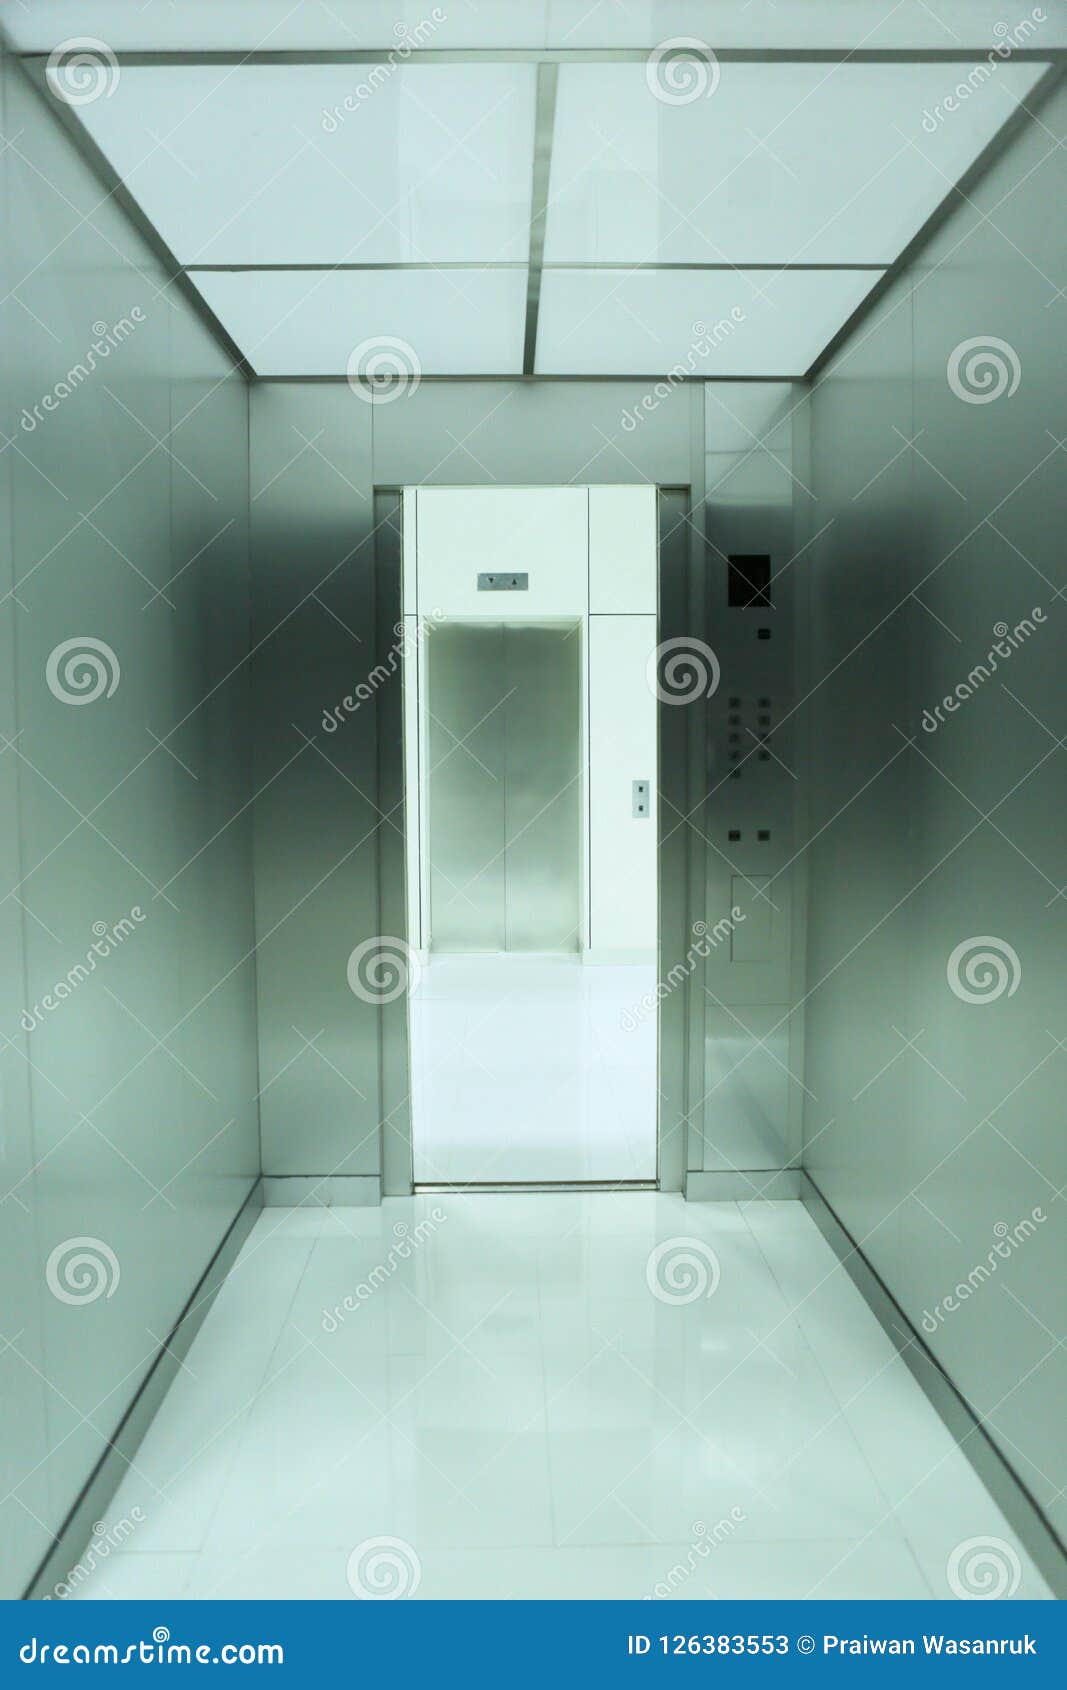 Download Inside A Mock Up Elevator Stock Image Image Of Office 126383553